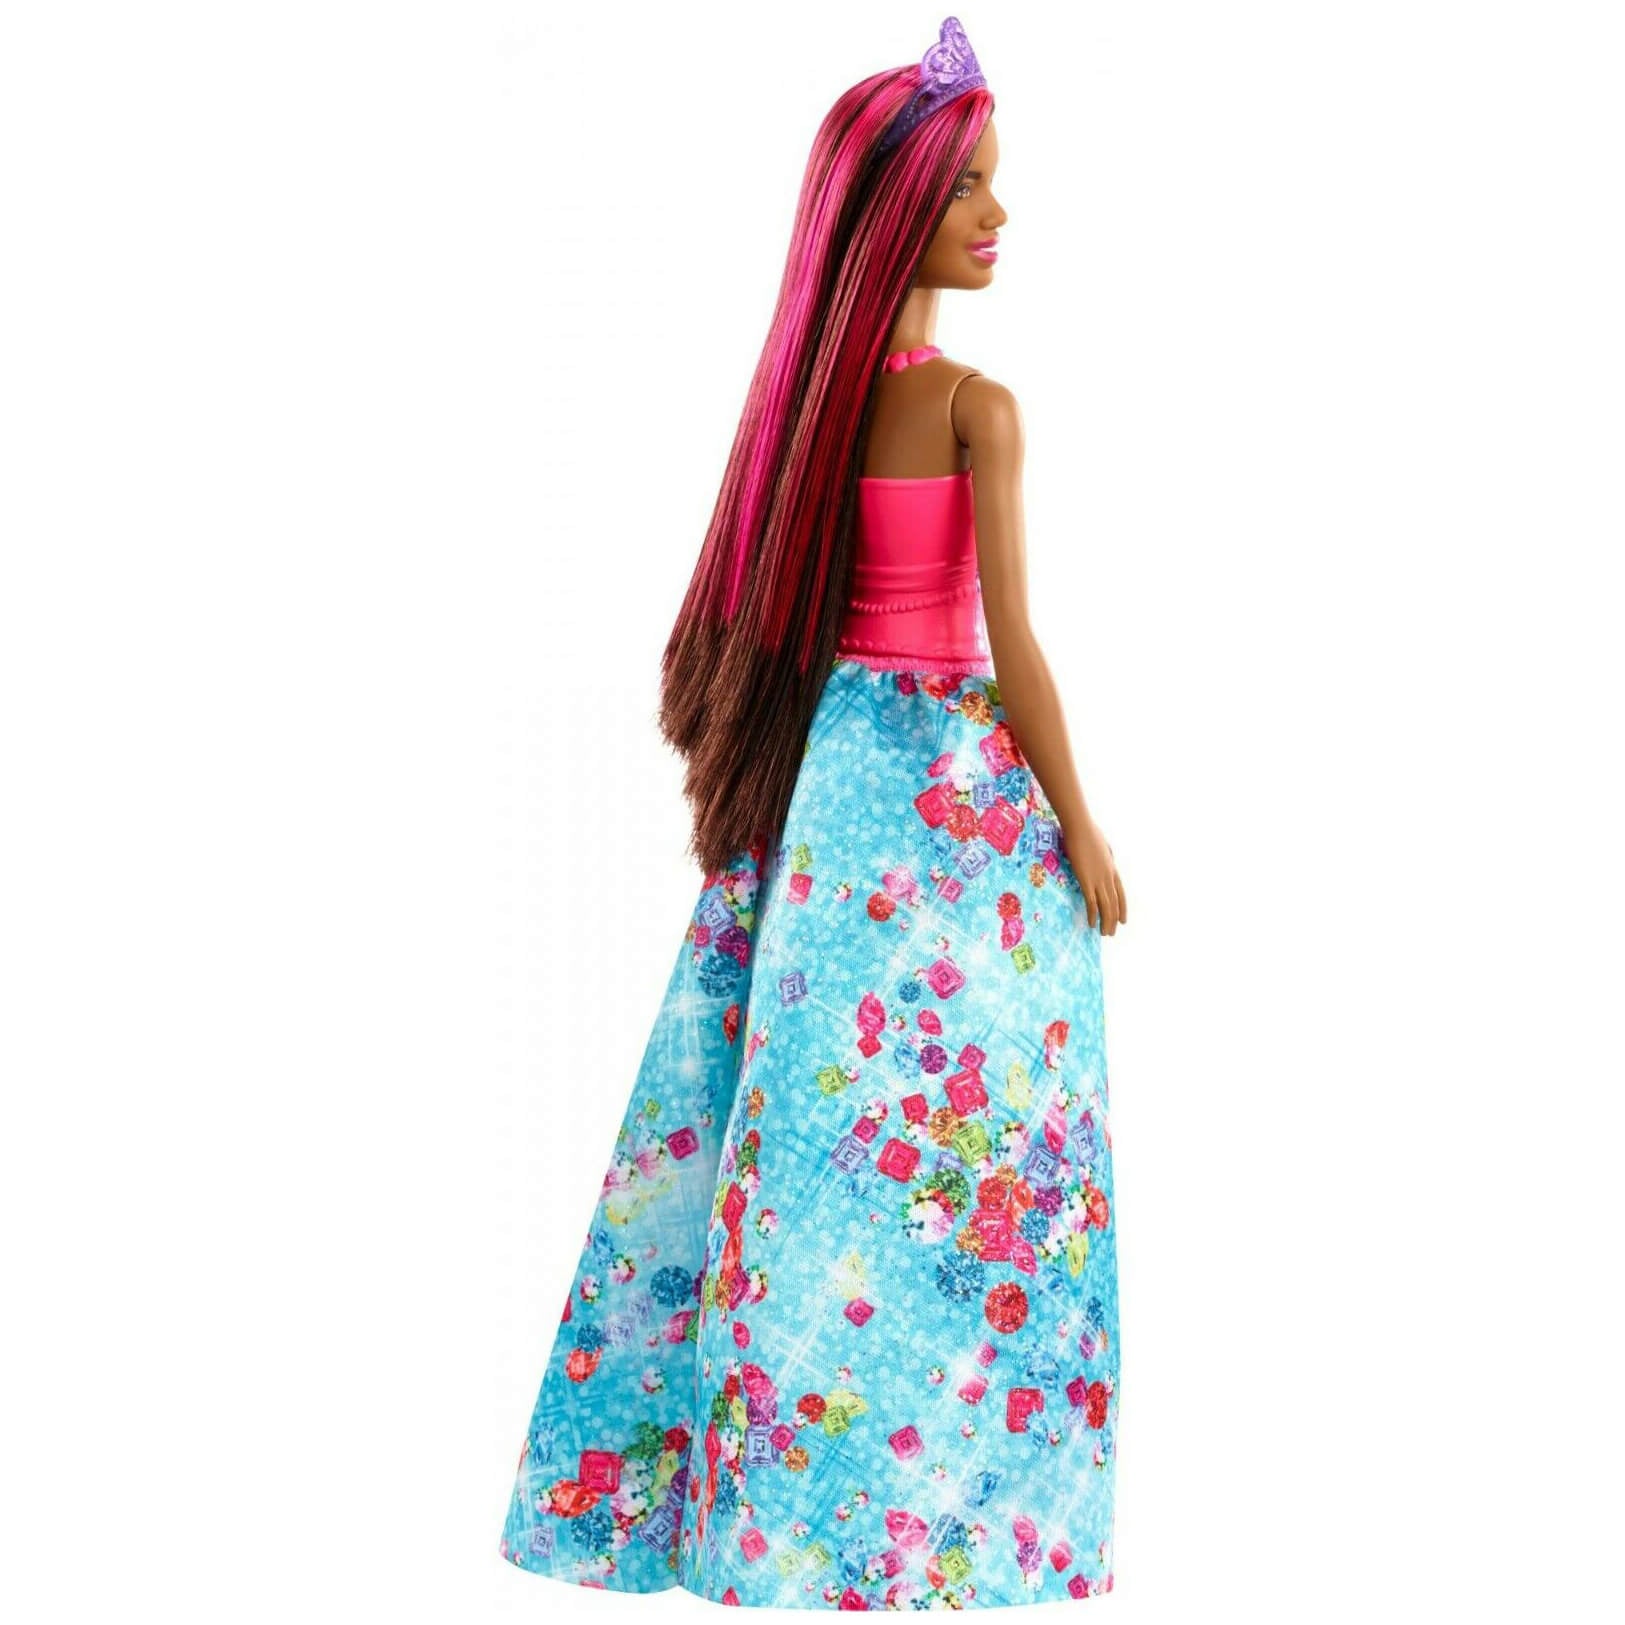 Barbie Dreamtopia Doll with Gemstone Dress